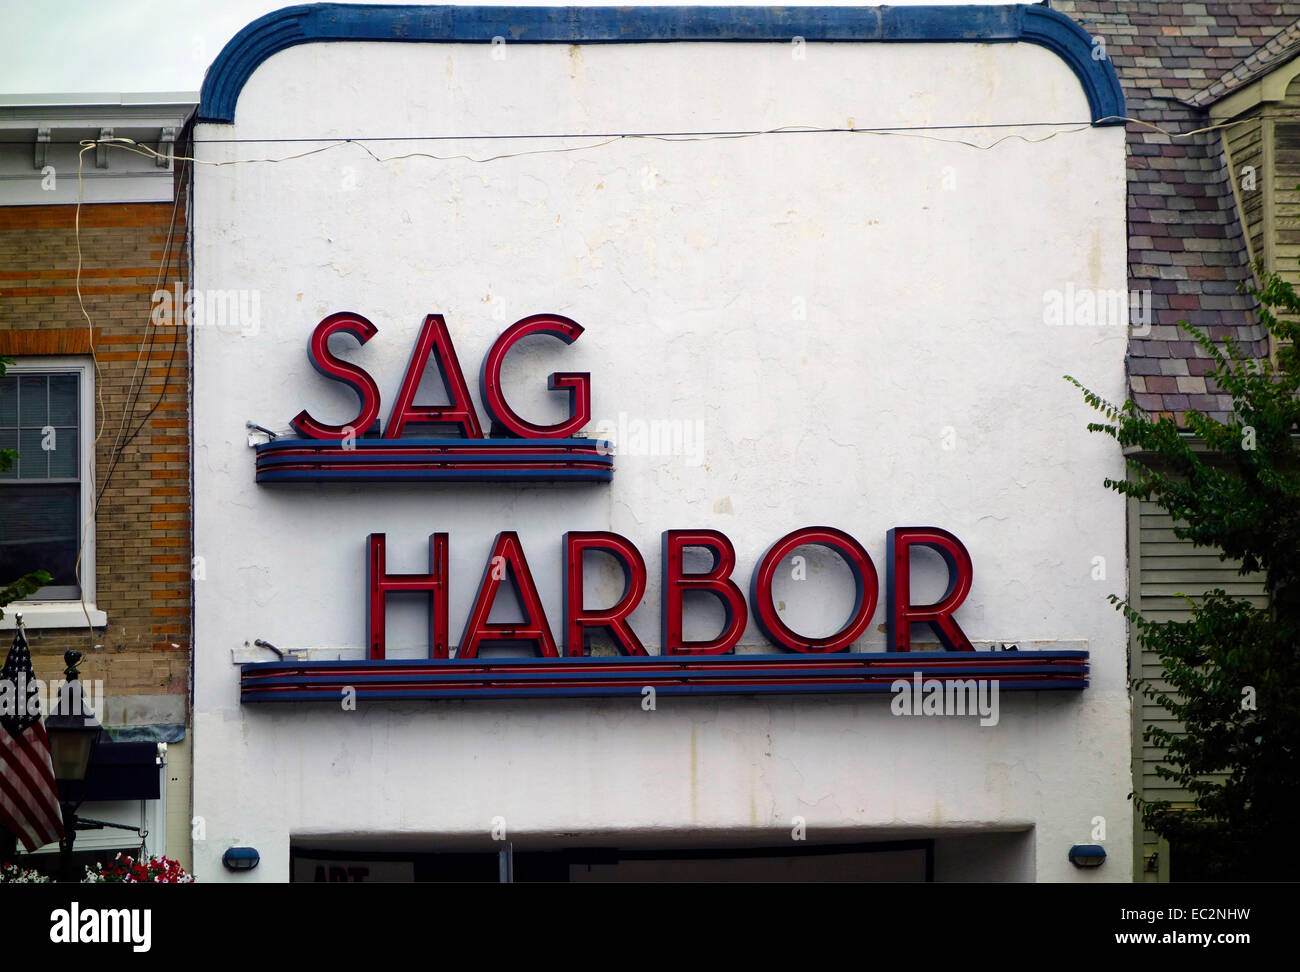 Sag harbor long island New York street scene Stock Photo